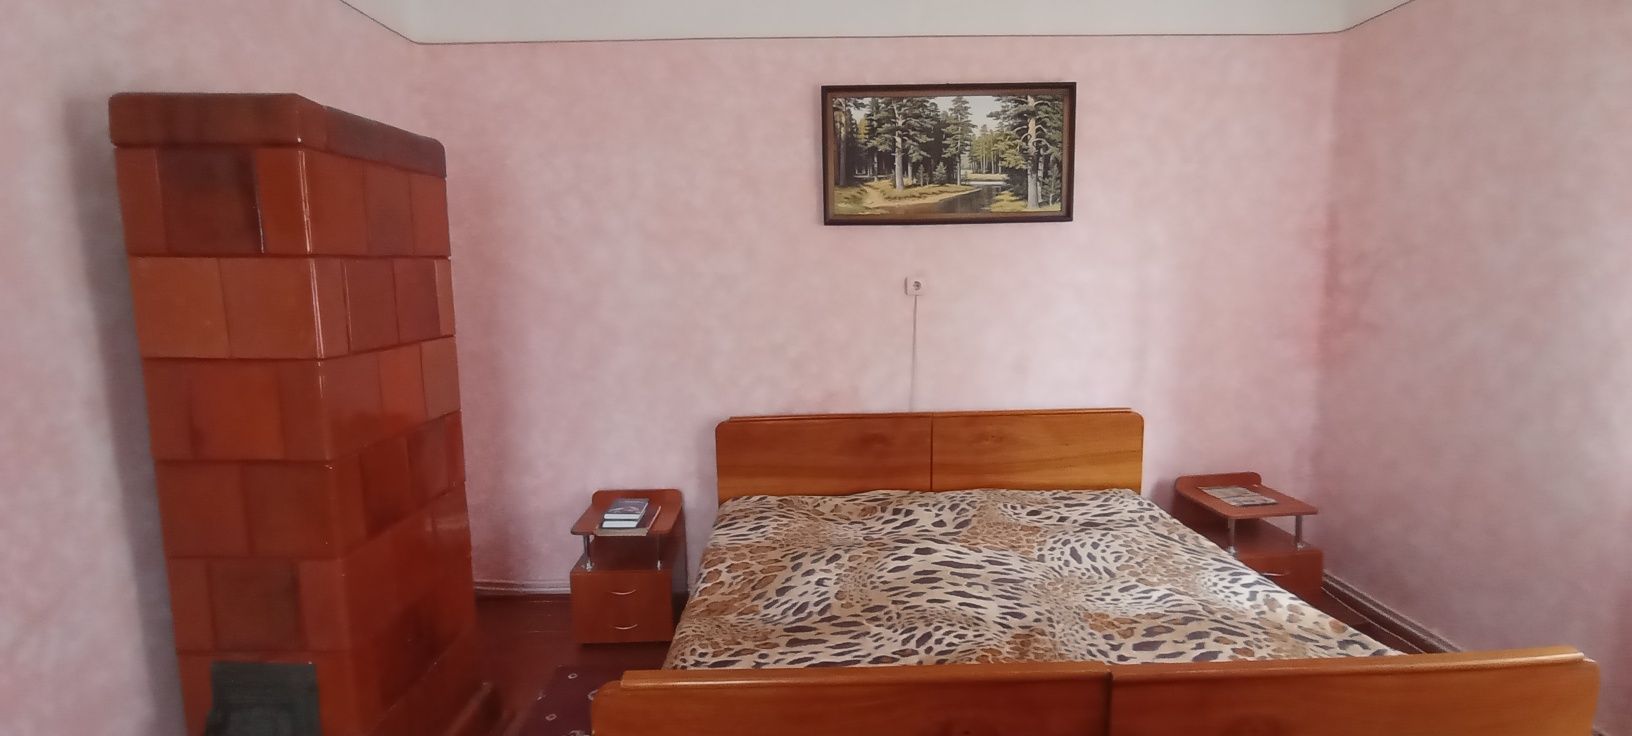 Оренда будинку на курорту Поляна Закарпатської області